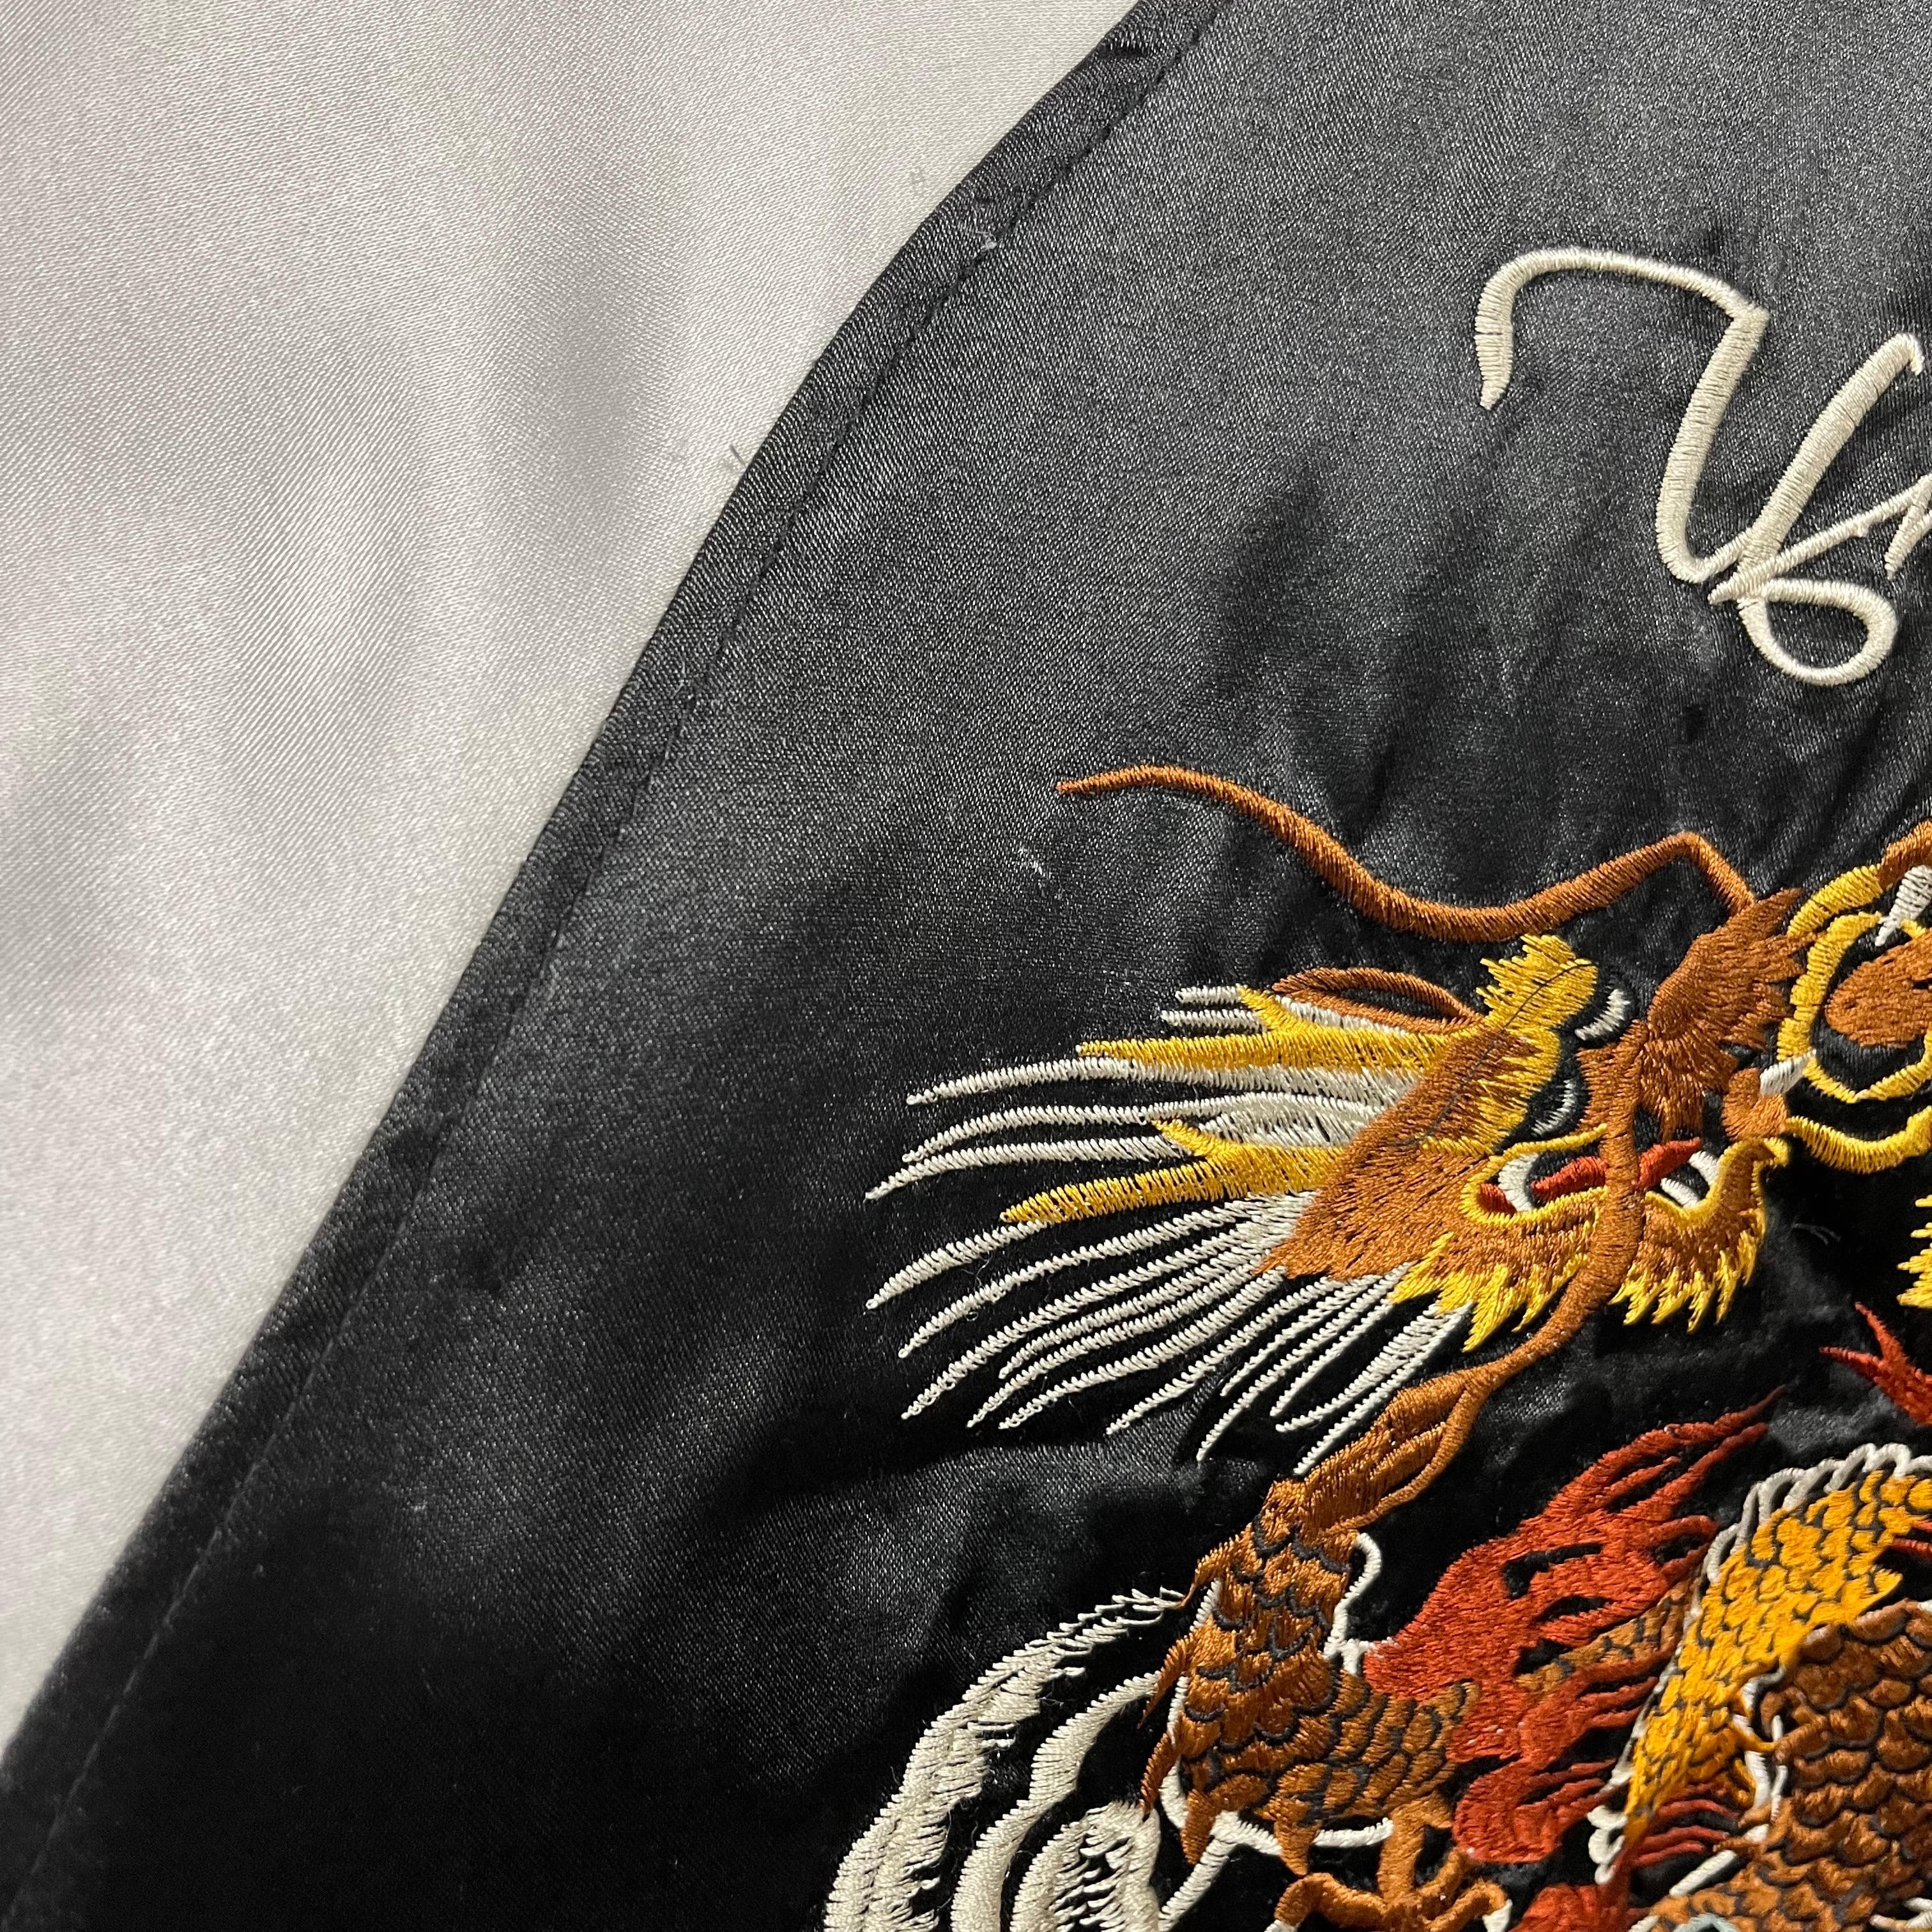 MAHARISHI VINTAGE 刺繍ベトジャン 選ぶなら 49.0%割引 sandorobotics.com